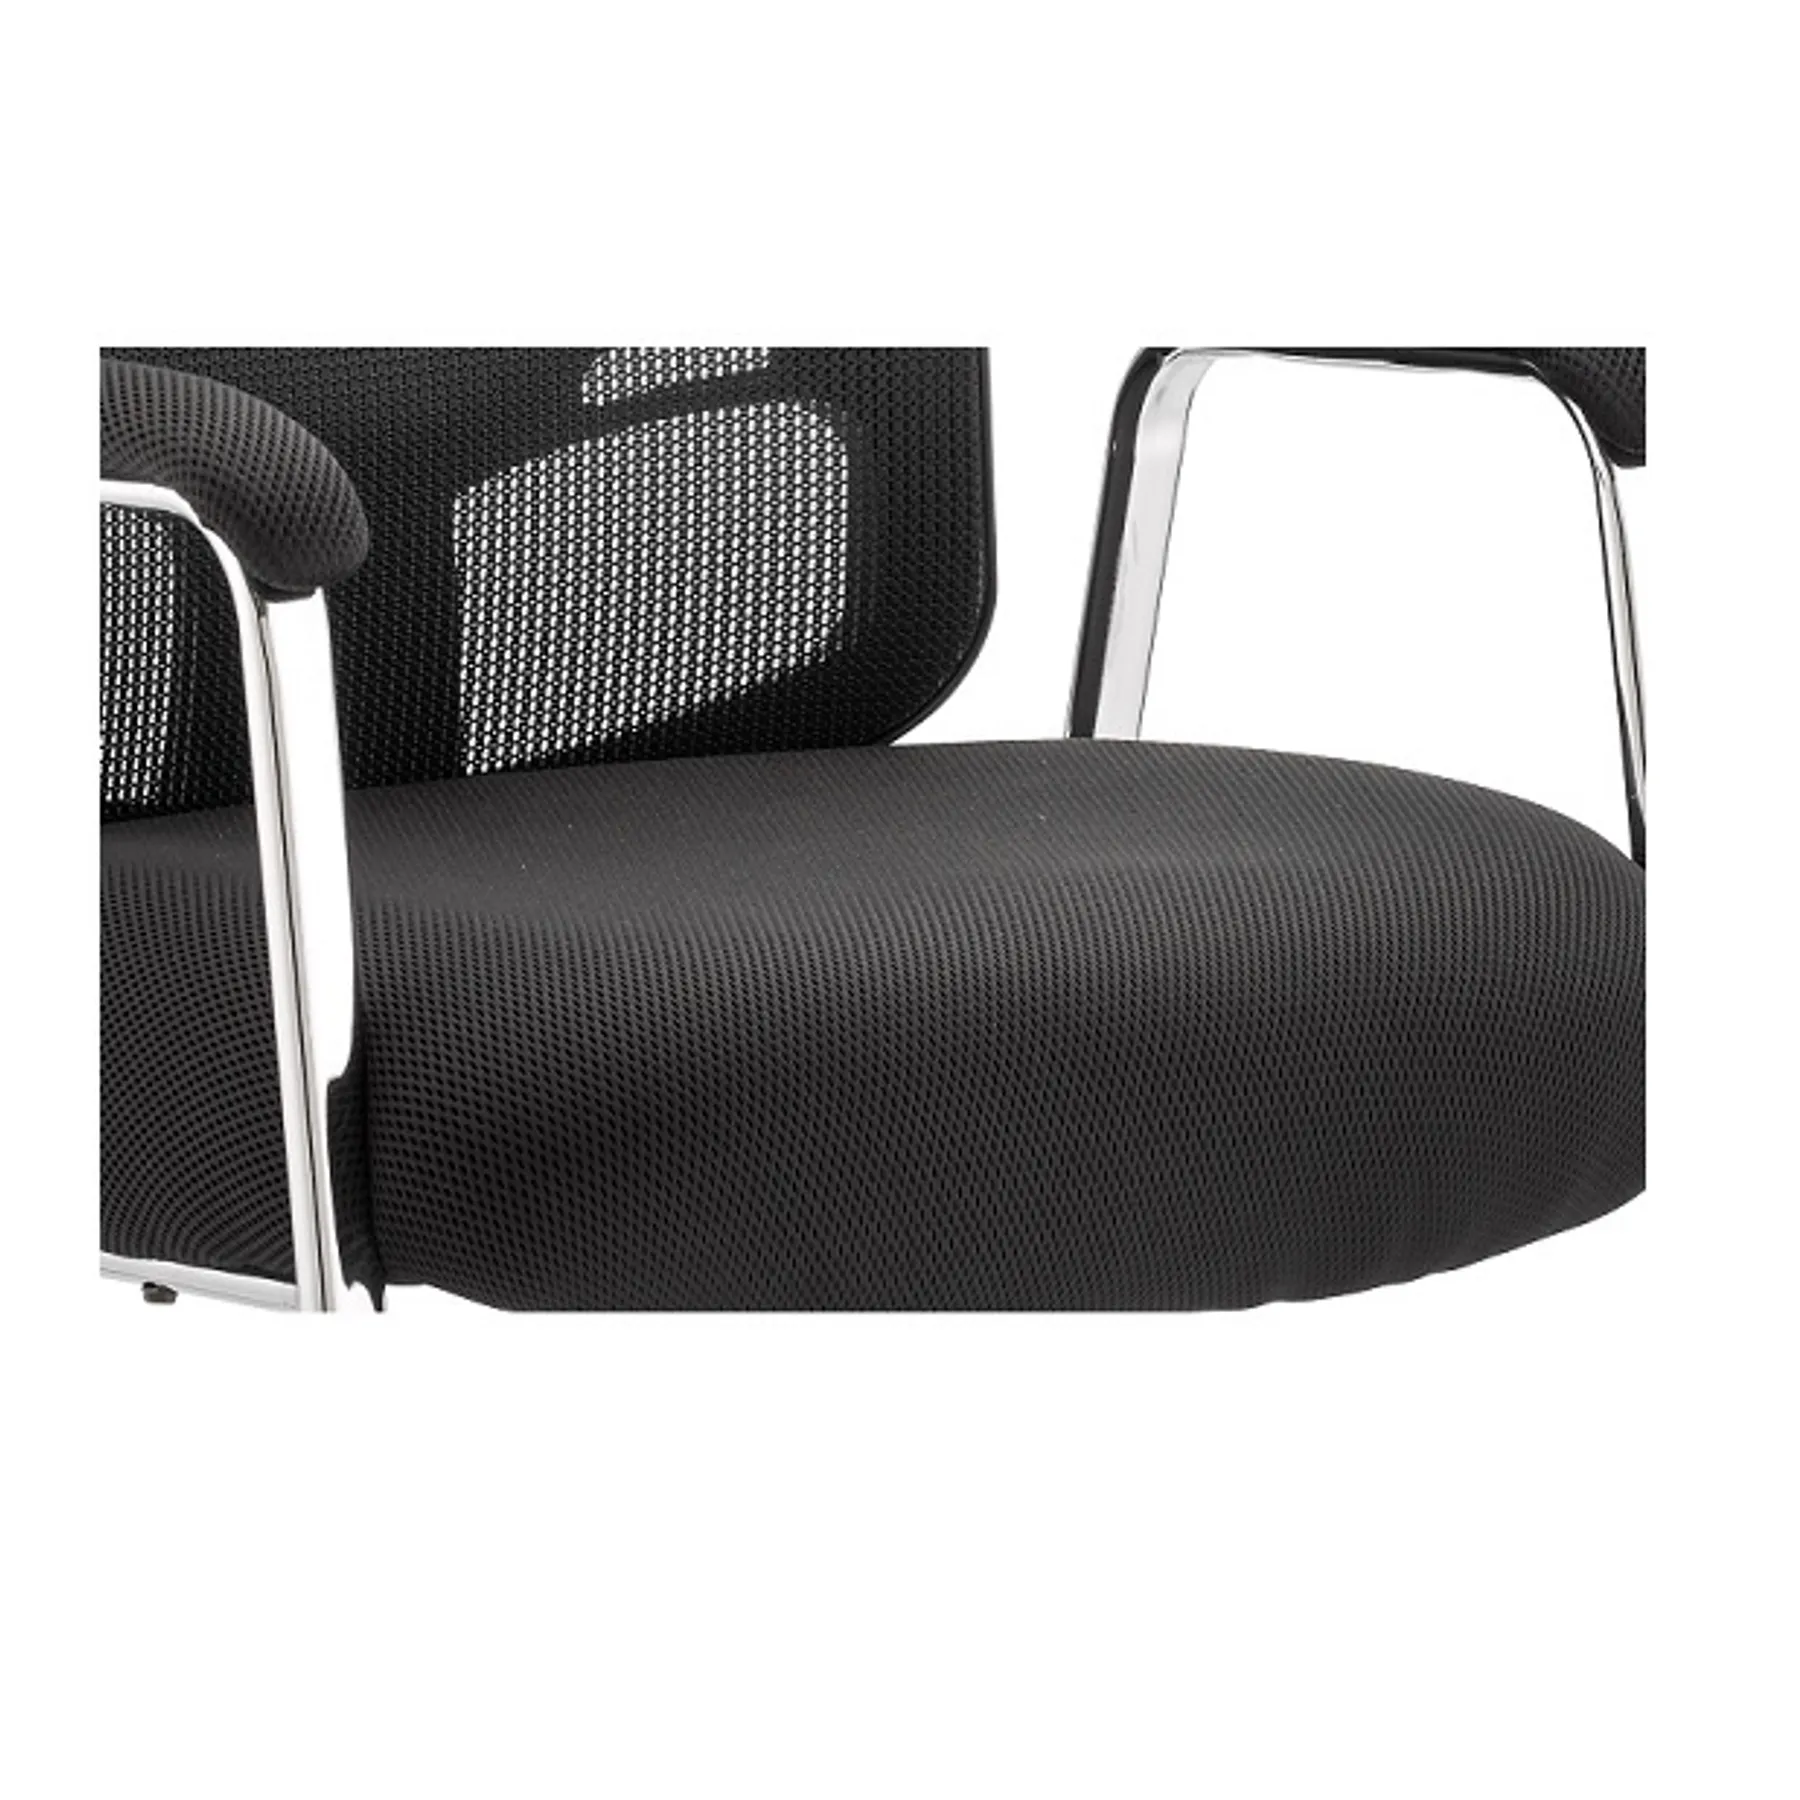 Lof Direct Dynamic portland mesh visitor chair 4 leg black close up seat